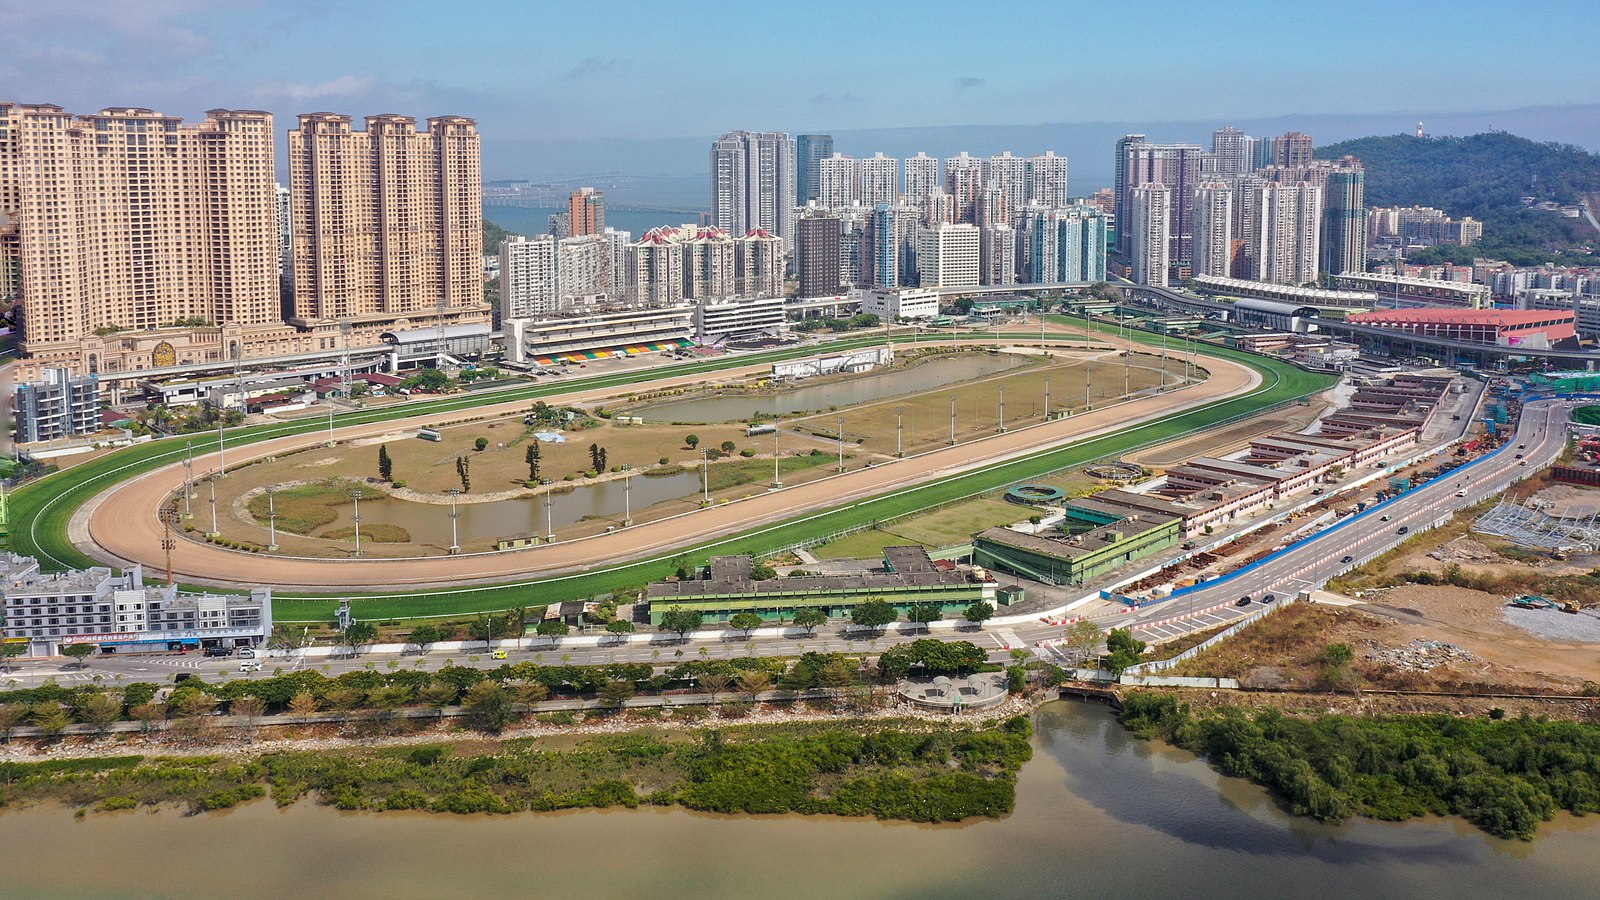 Macau Jockey Club hit with MOP 1.7 billion loss in 2020